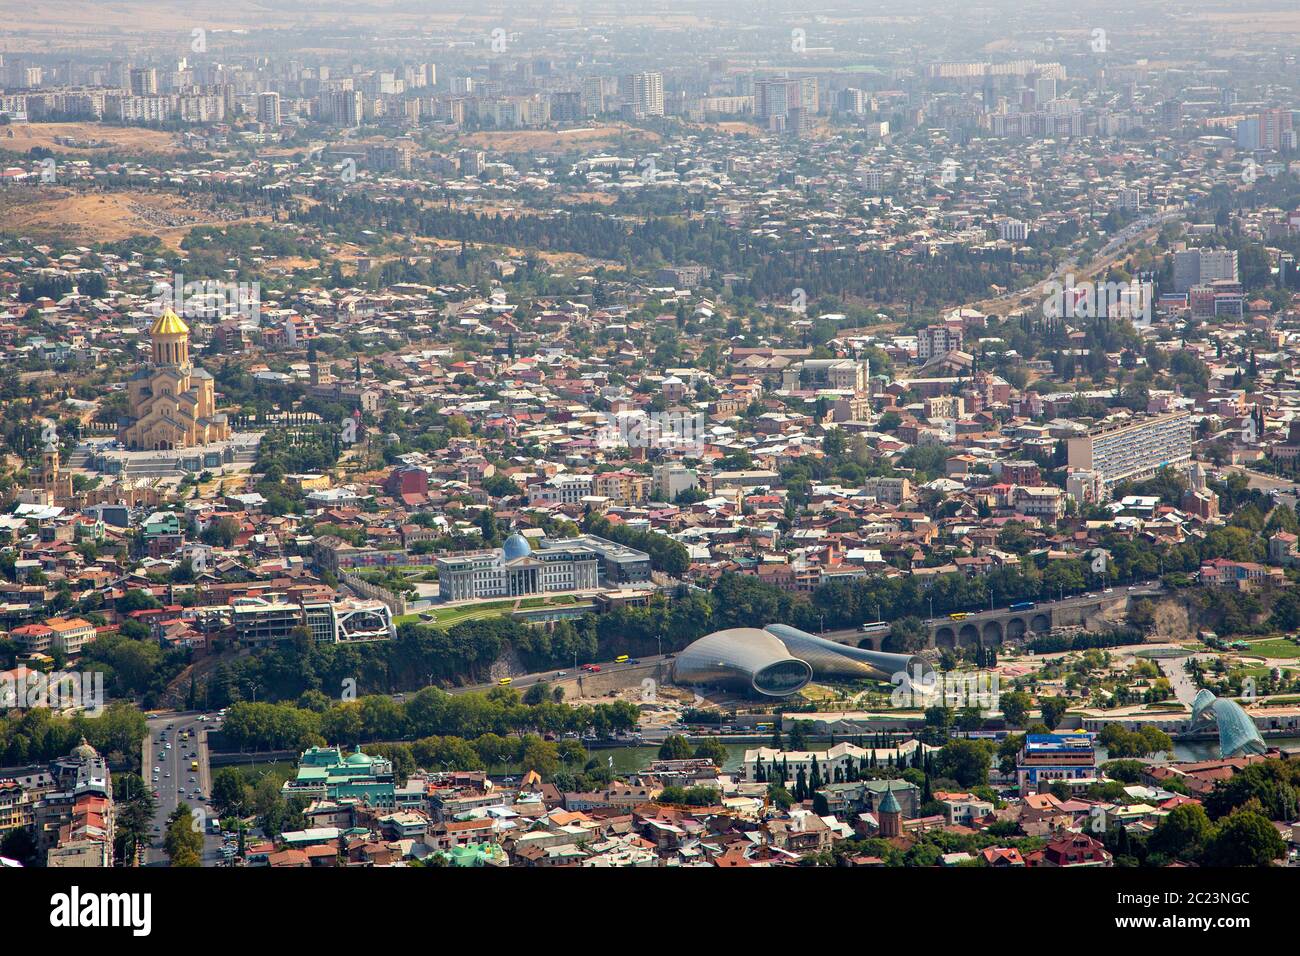 Aerial view over Tbilisi, capital of Georgia. Stock Photo